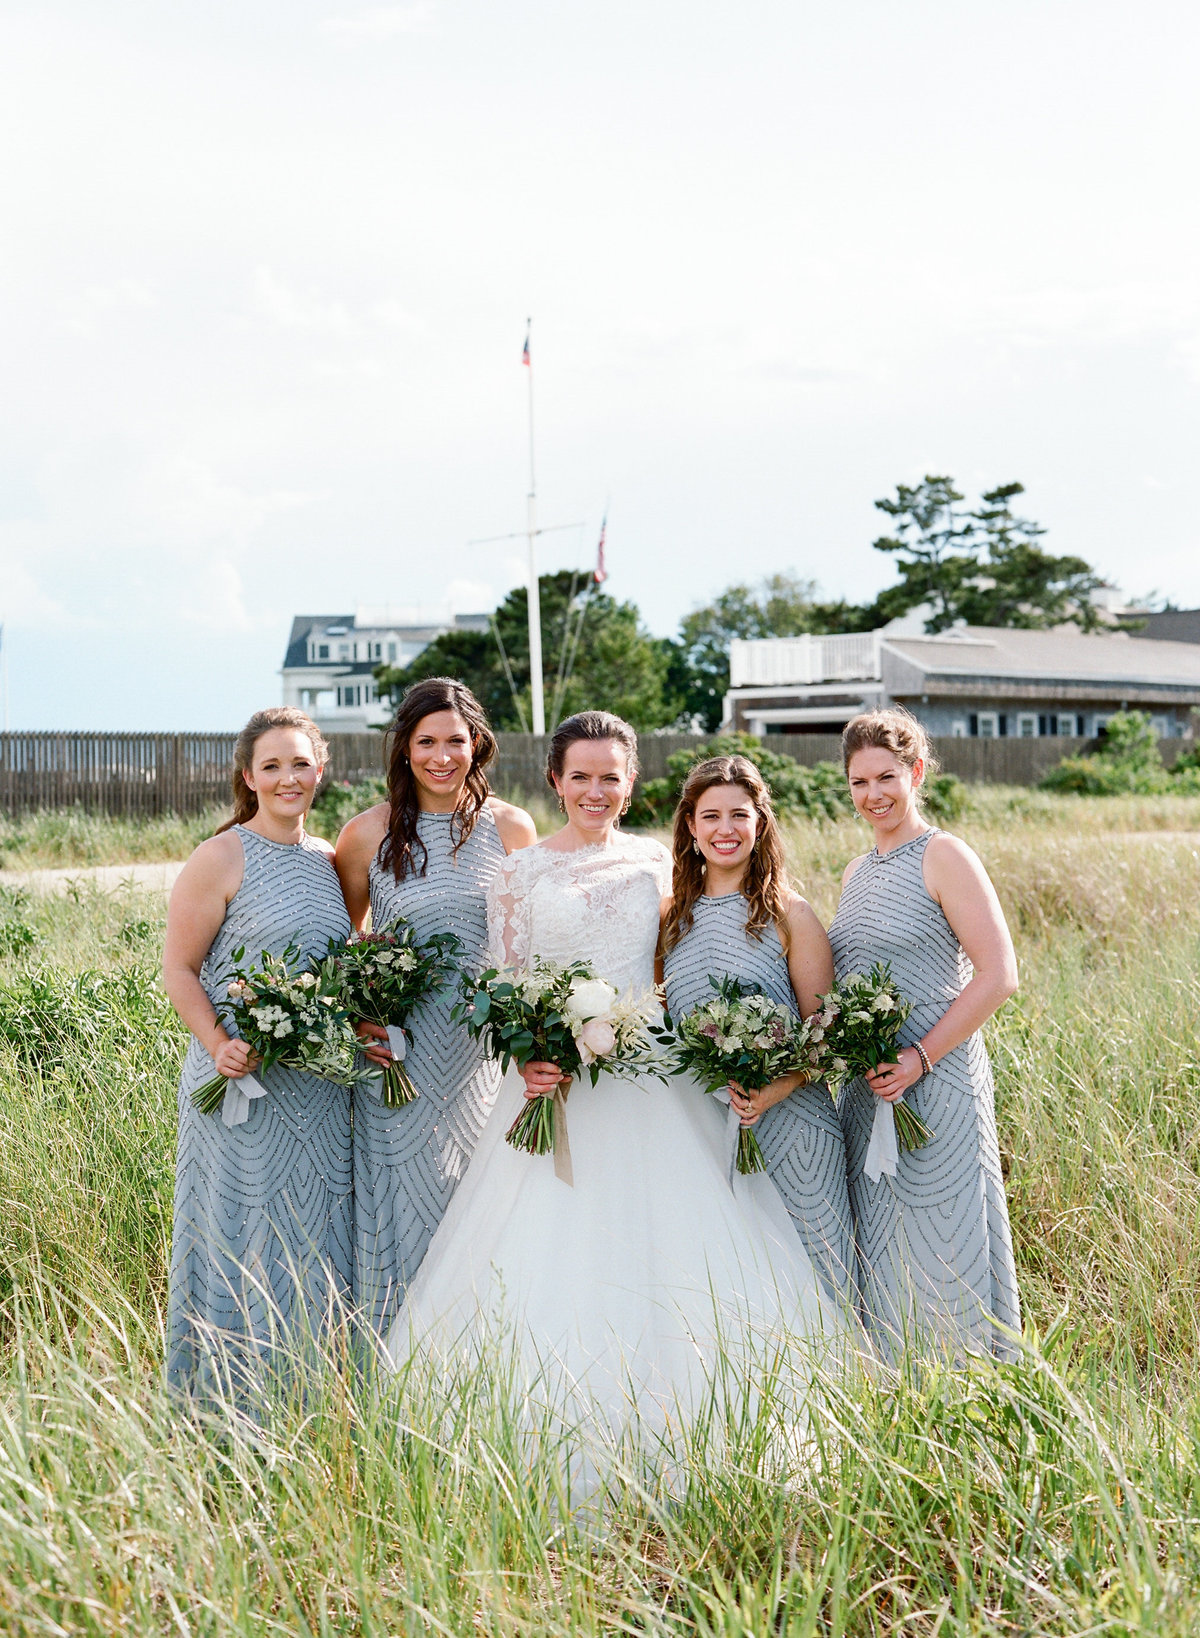 Bridesmaids in gray